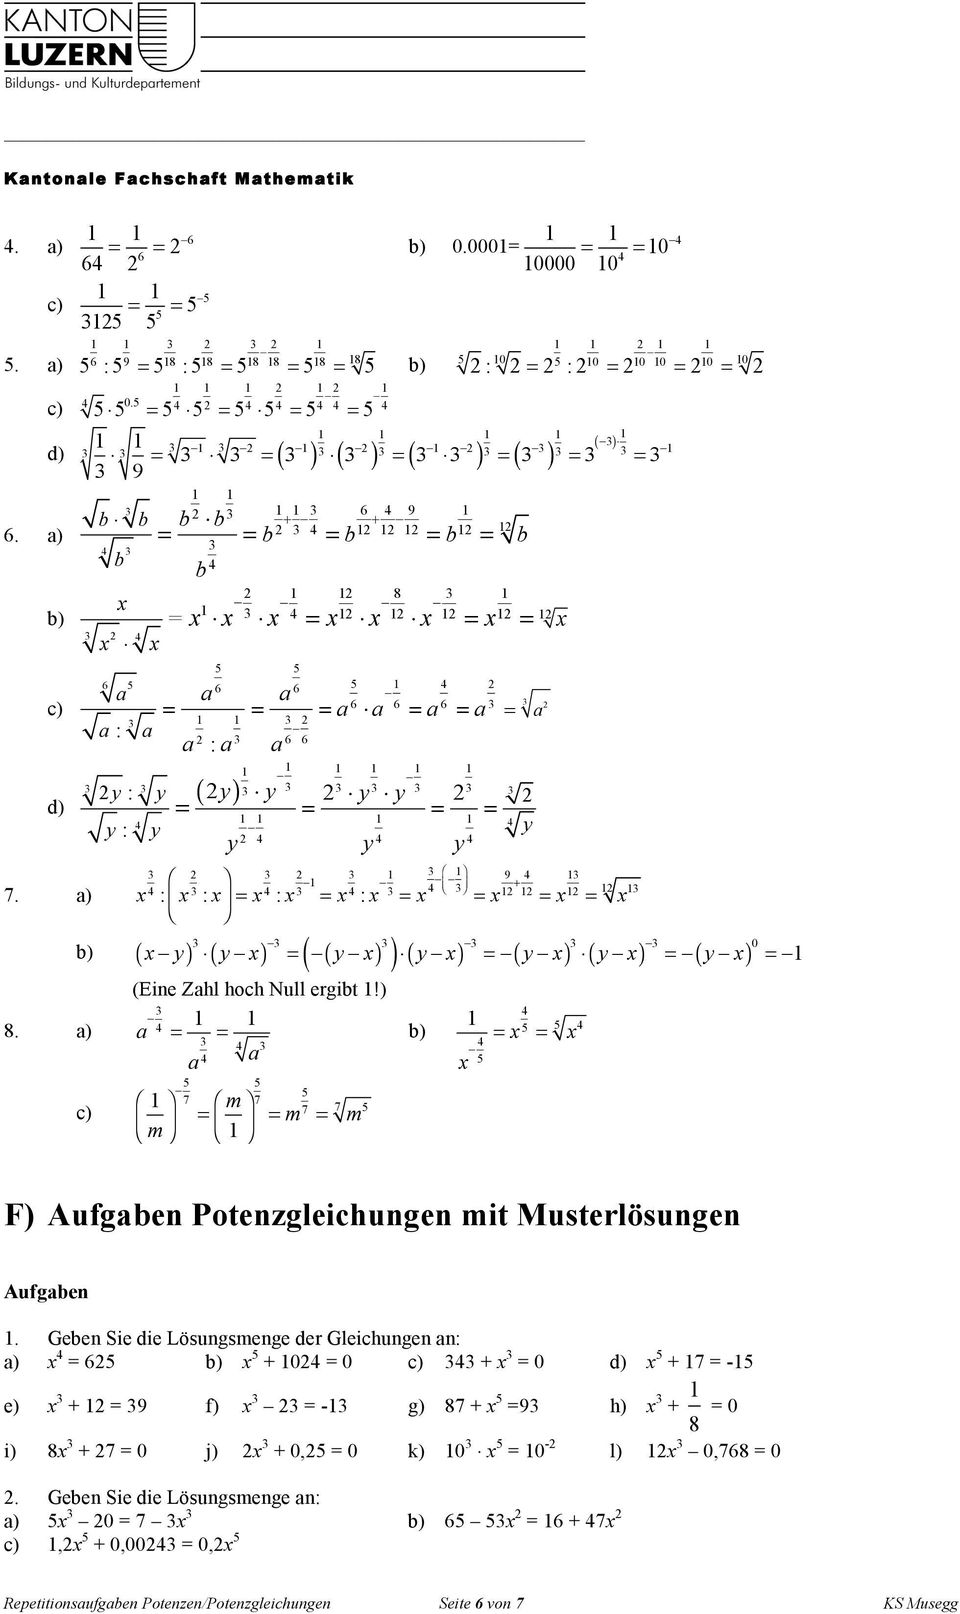 ) 9 + 0 y y y y y y y (Eie Zhl hoch Null ergibt!) 7 7 7 7 F) Aufgbe Potezgleichuge it Musterlösuge Aufgbe.